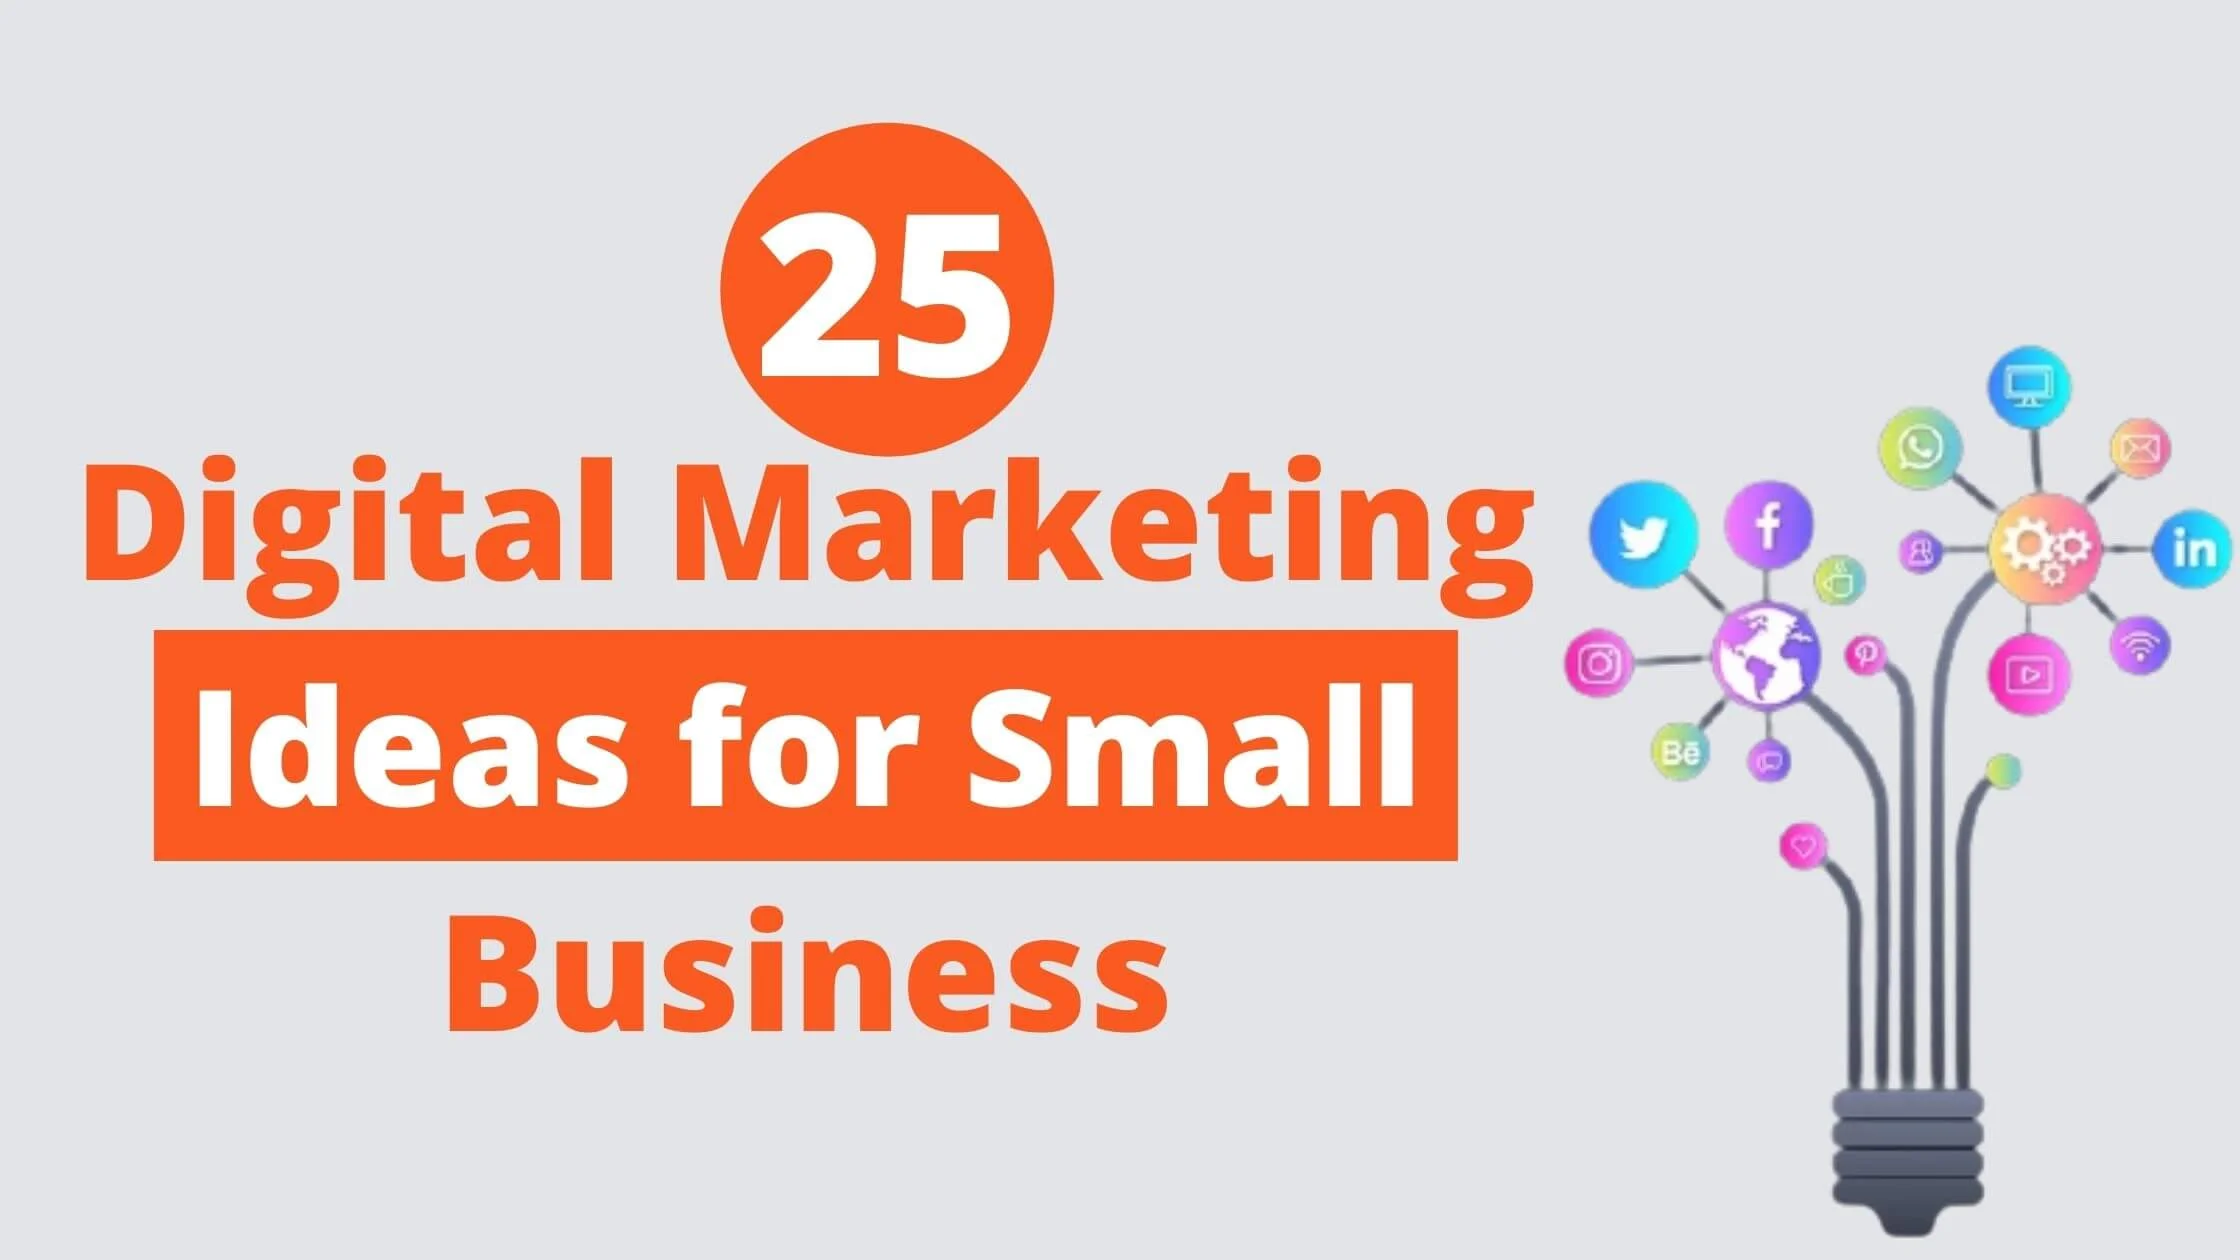 Digital Marketing Ideas for Small Business